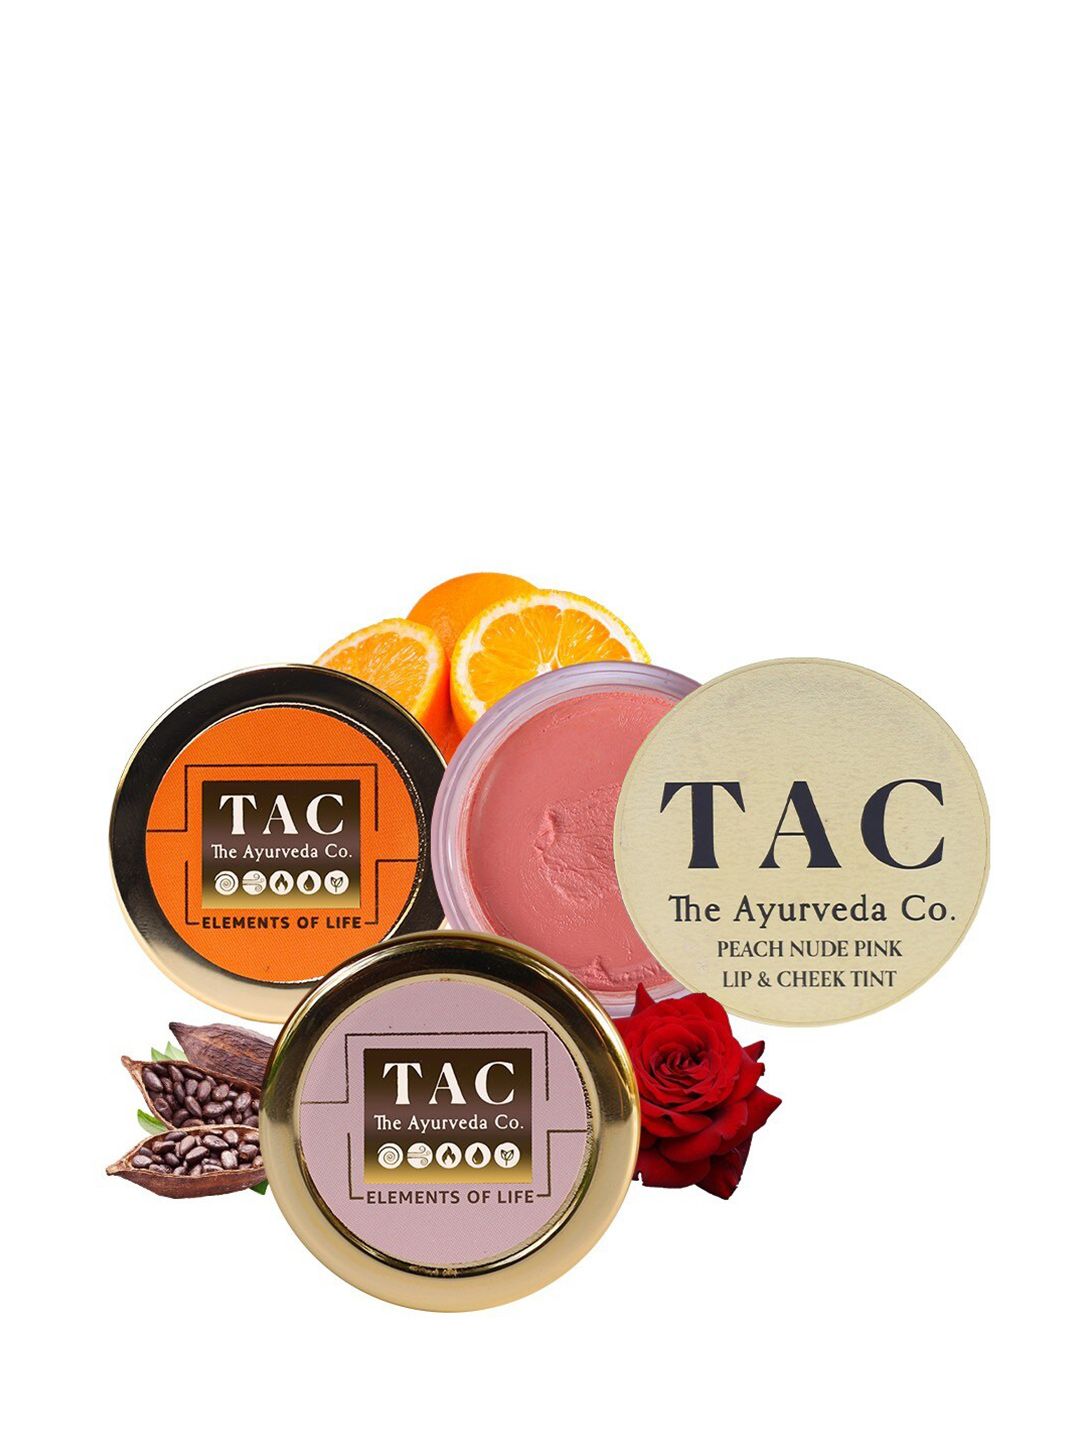 TAC - The Ayurveda Co. Peach Lip And Cheek Tint, Rose Petal Lip Balm & Vitamin C, E Scrub Price in India